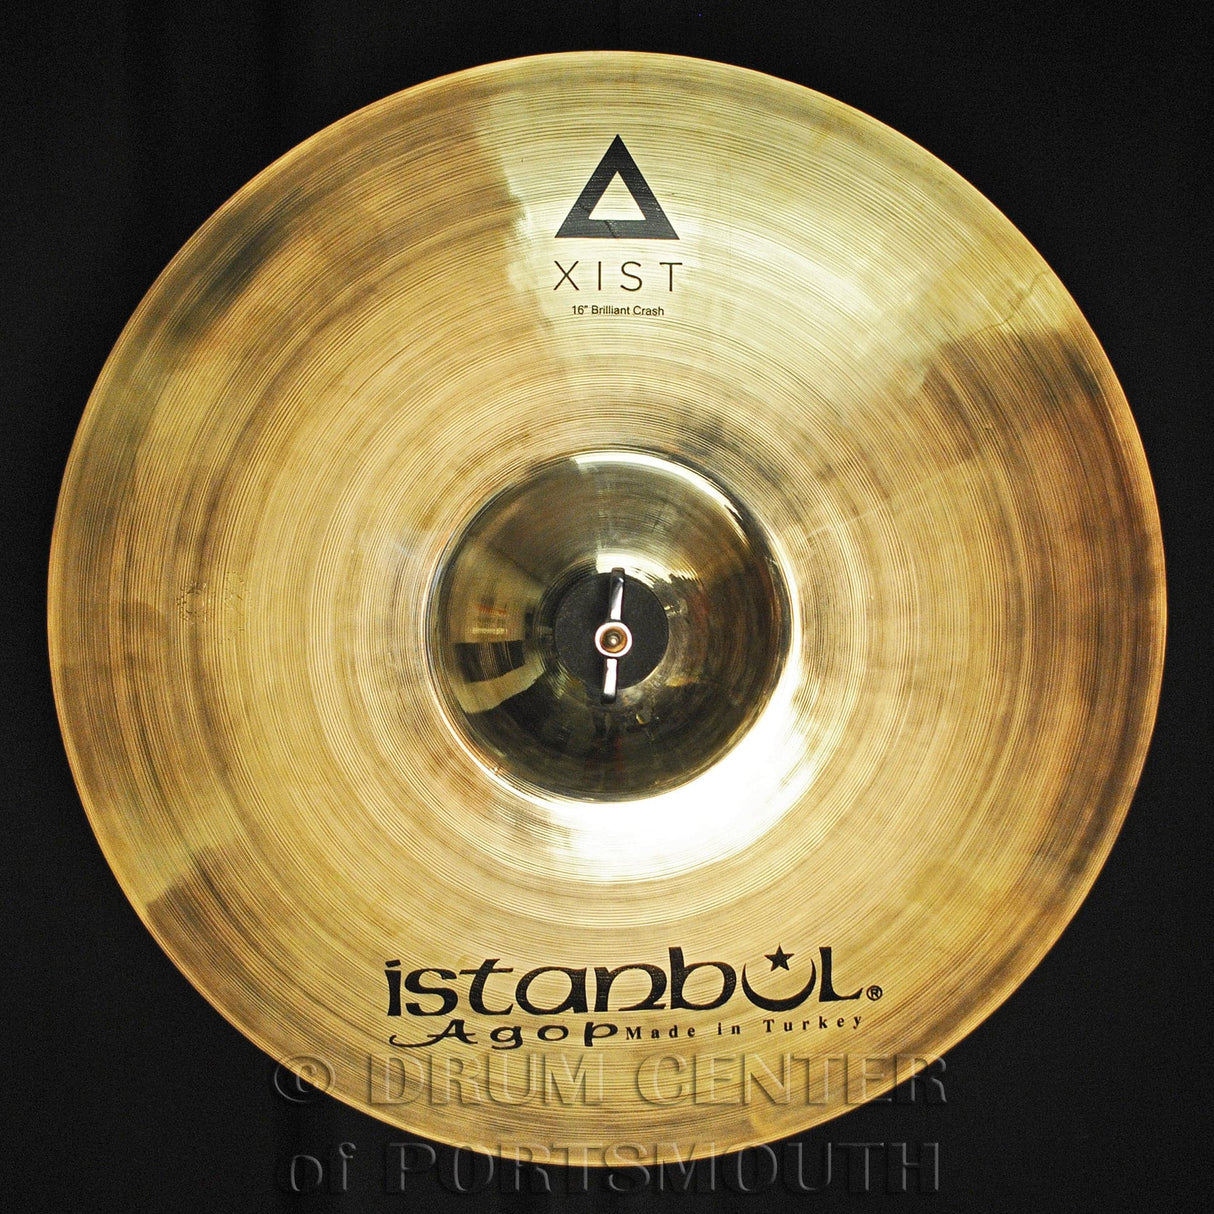 Istanbul Agop Xist Brilliant Crash Cymbal 16"